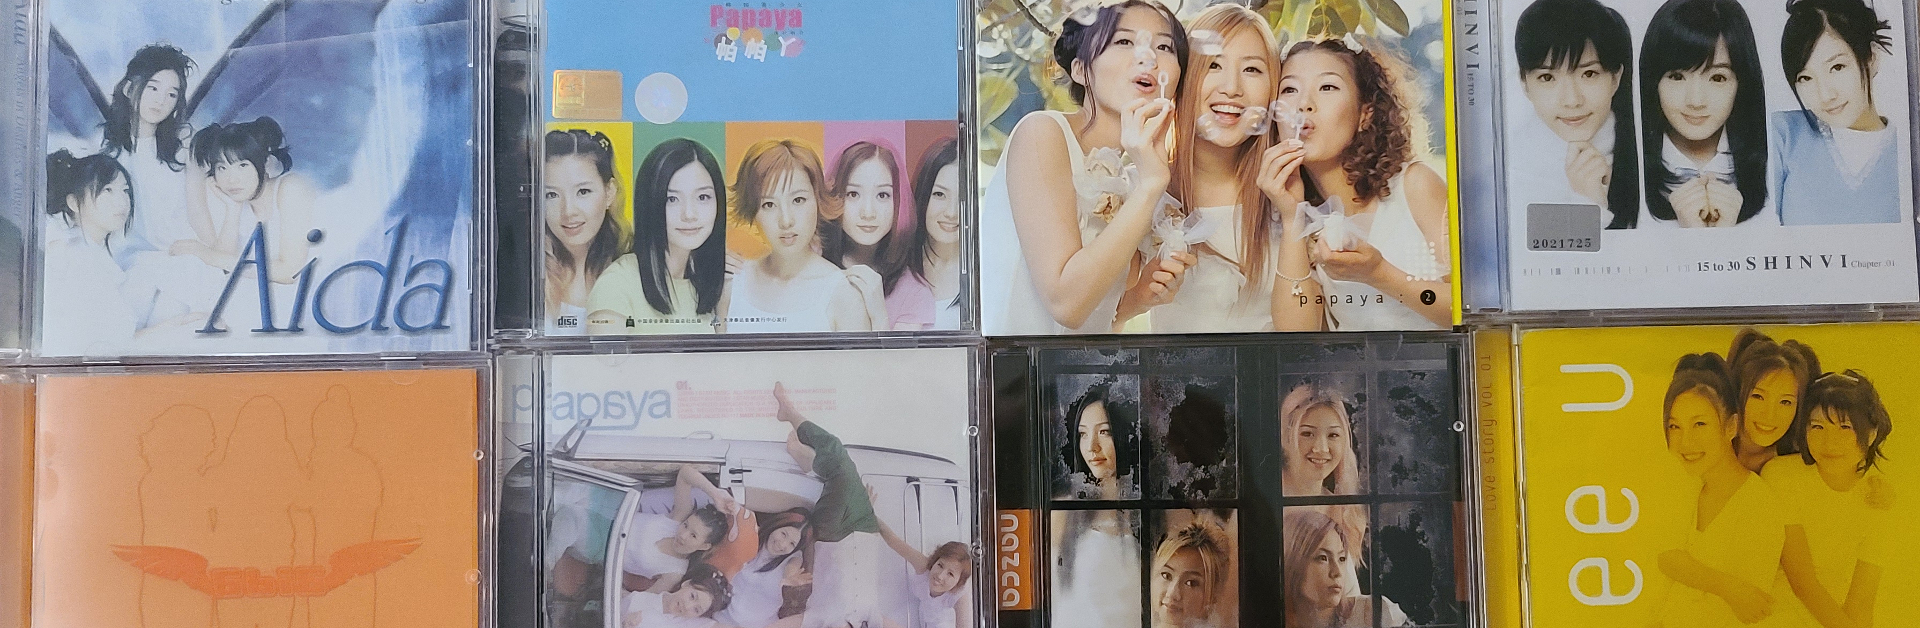 8 albums of various K-Pop Girl Groups